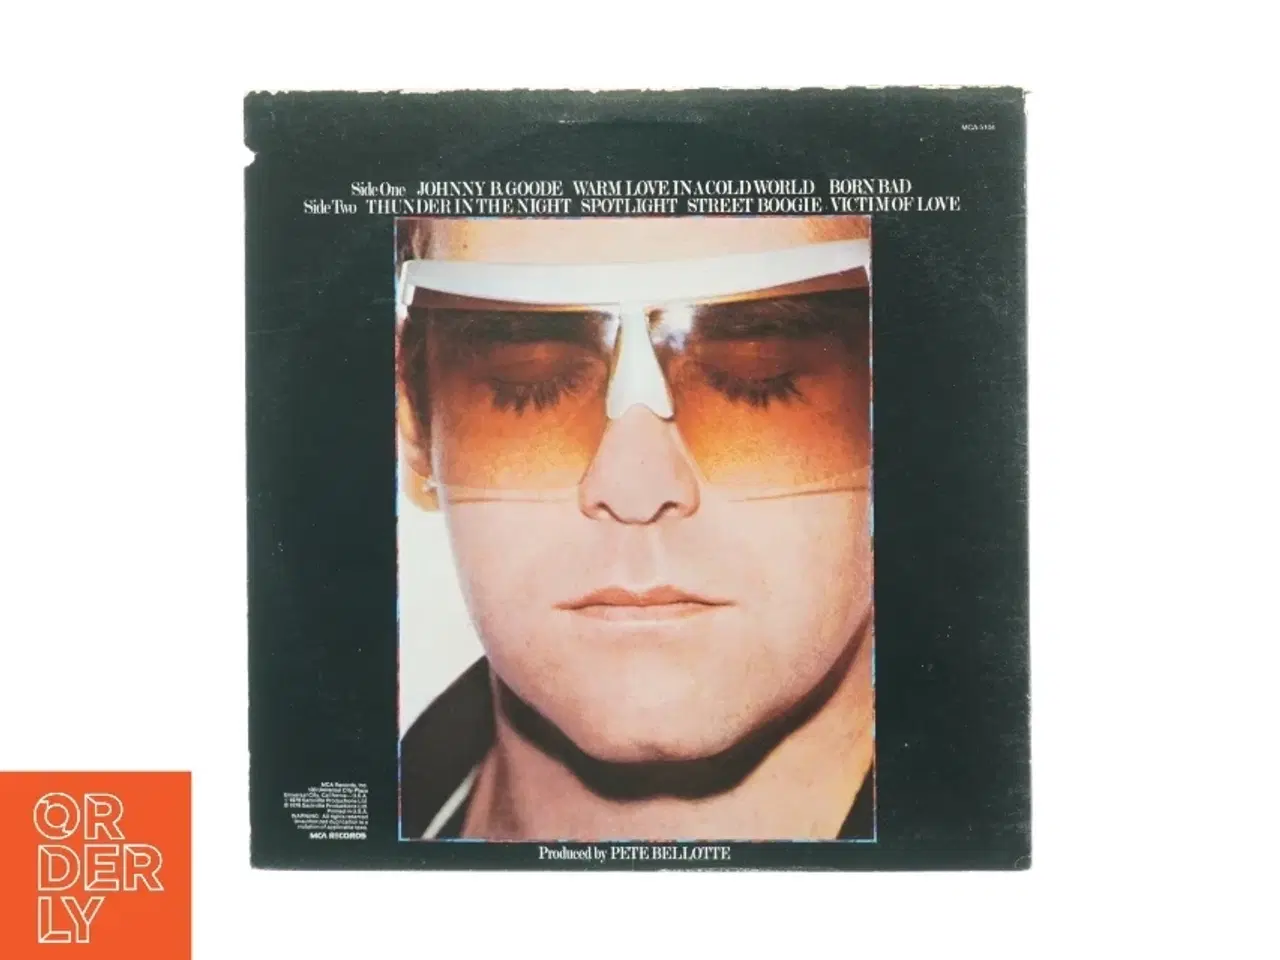 Billede 3 - Elton John 'Victim of Love' Vinyl LP fra MCA Records (str. 31 x 31 cm)